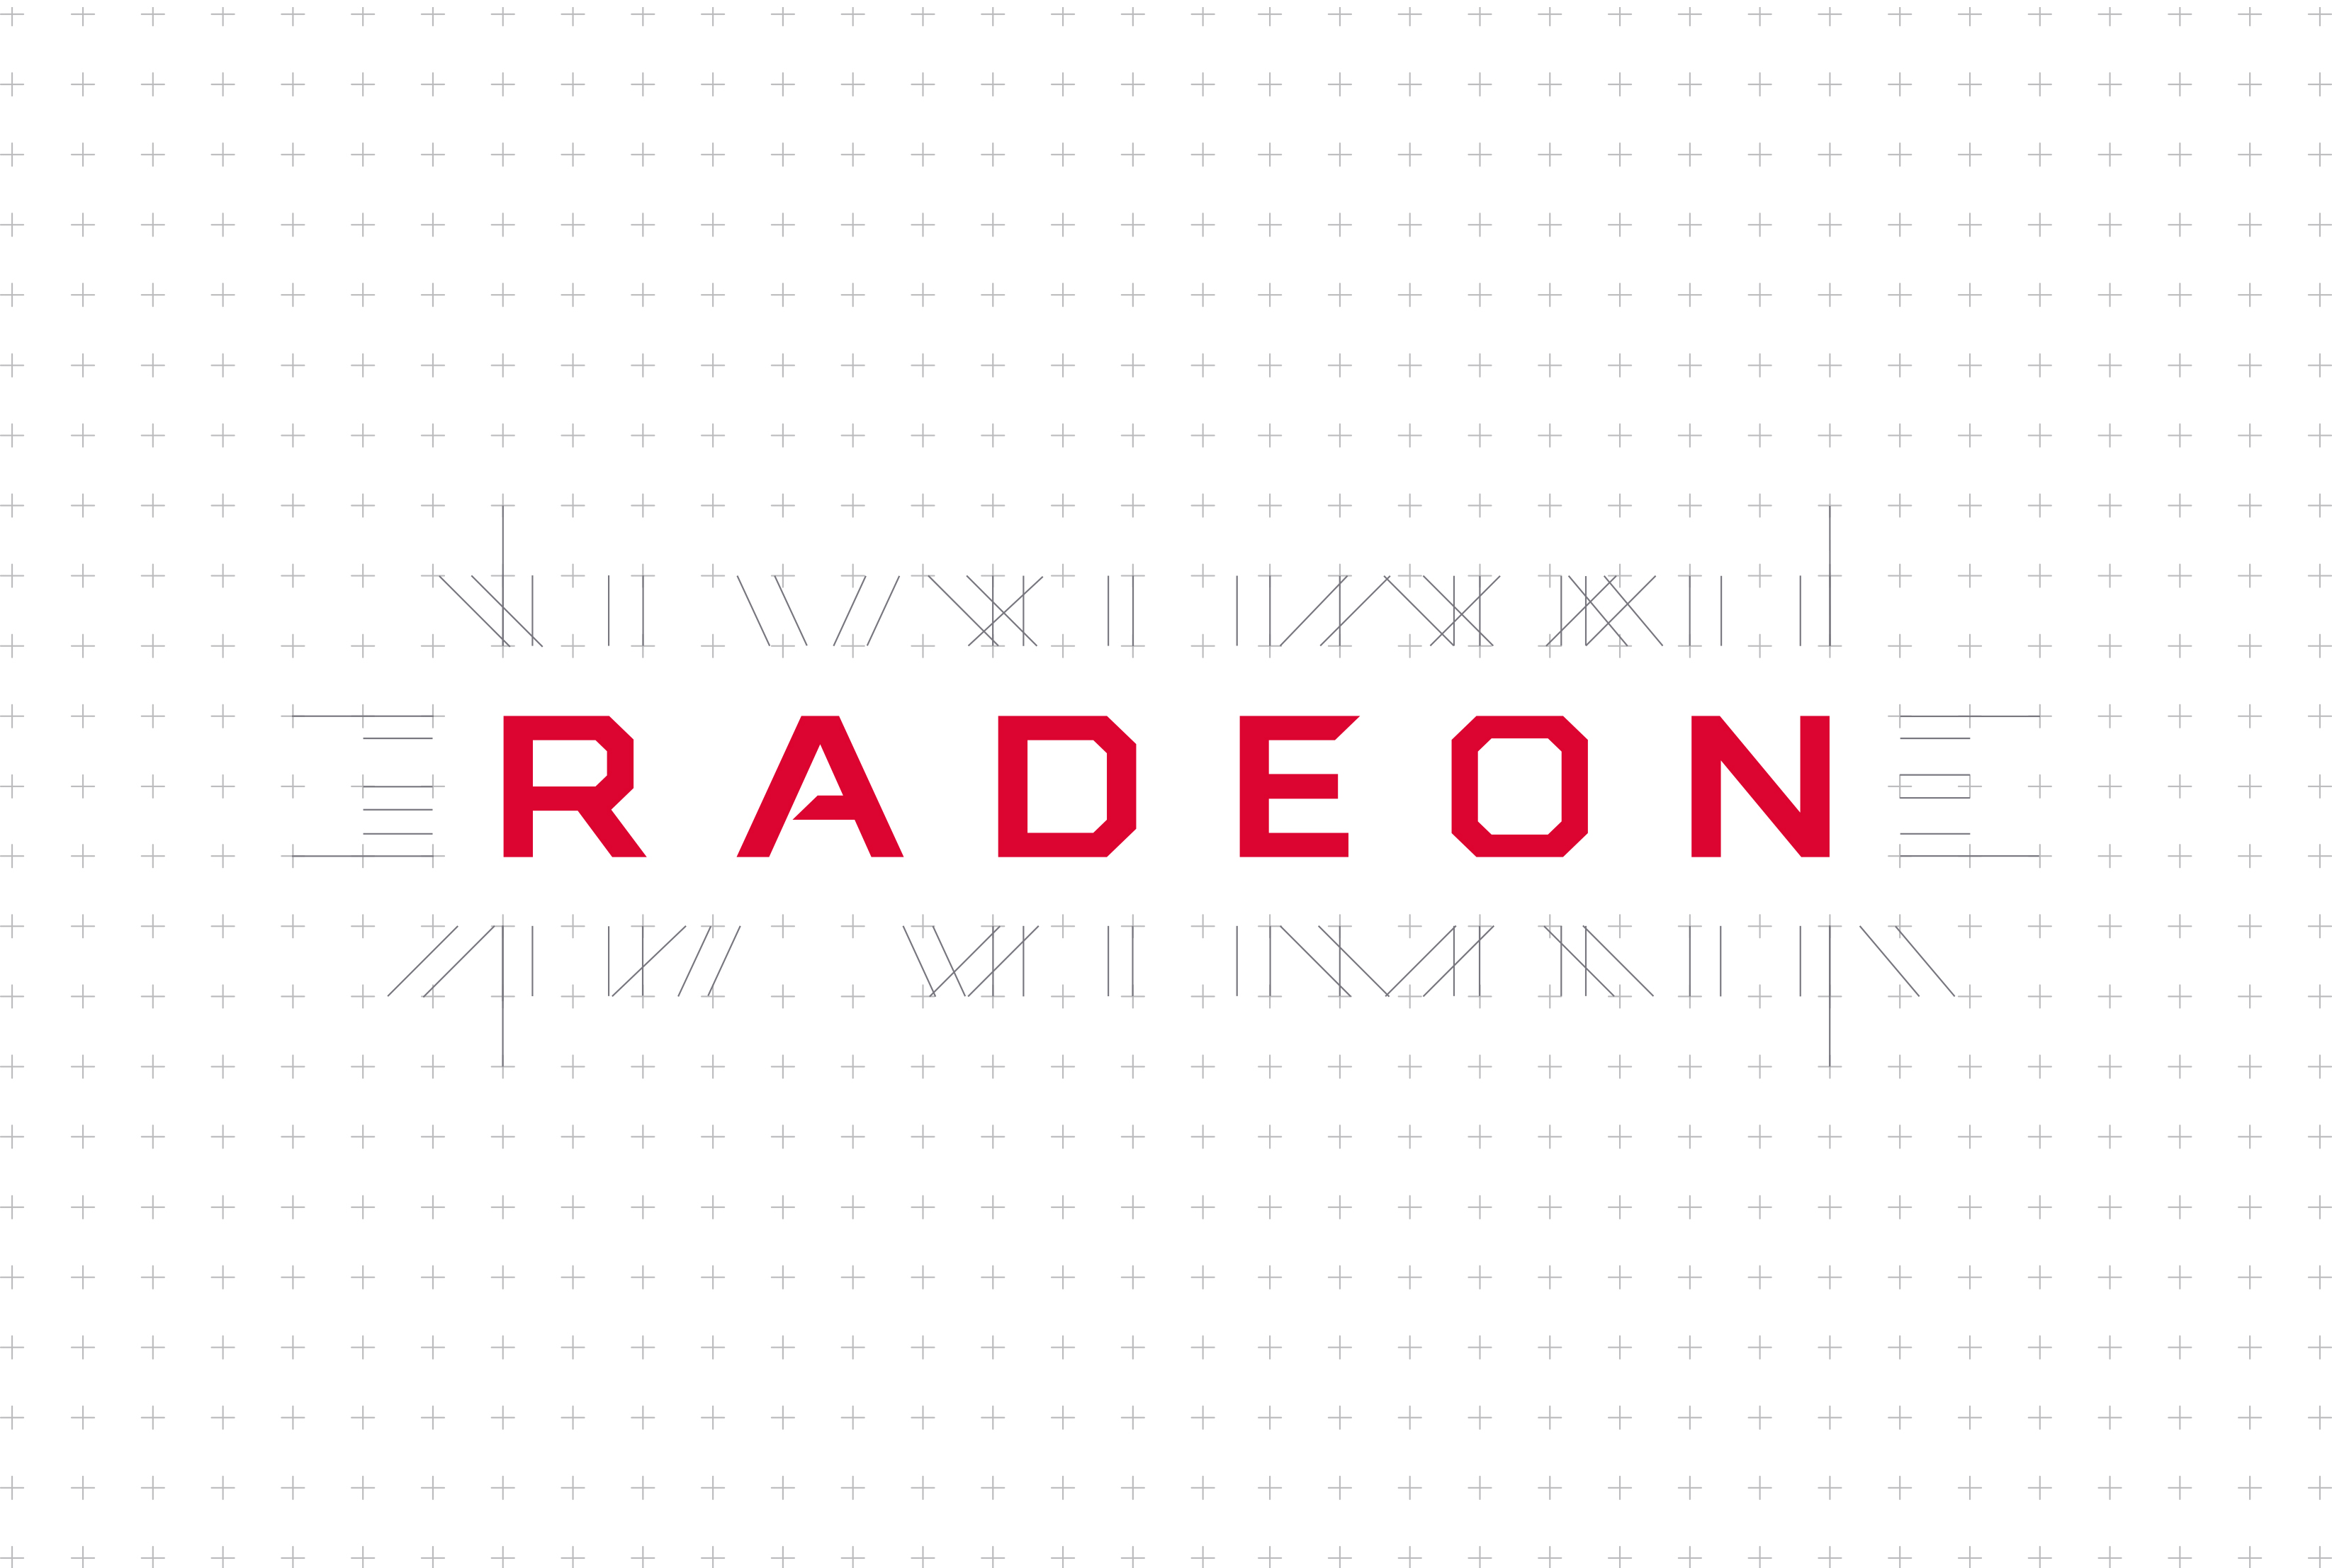 radeon-logo